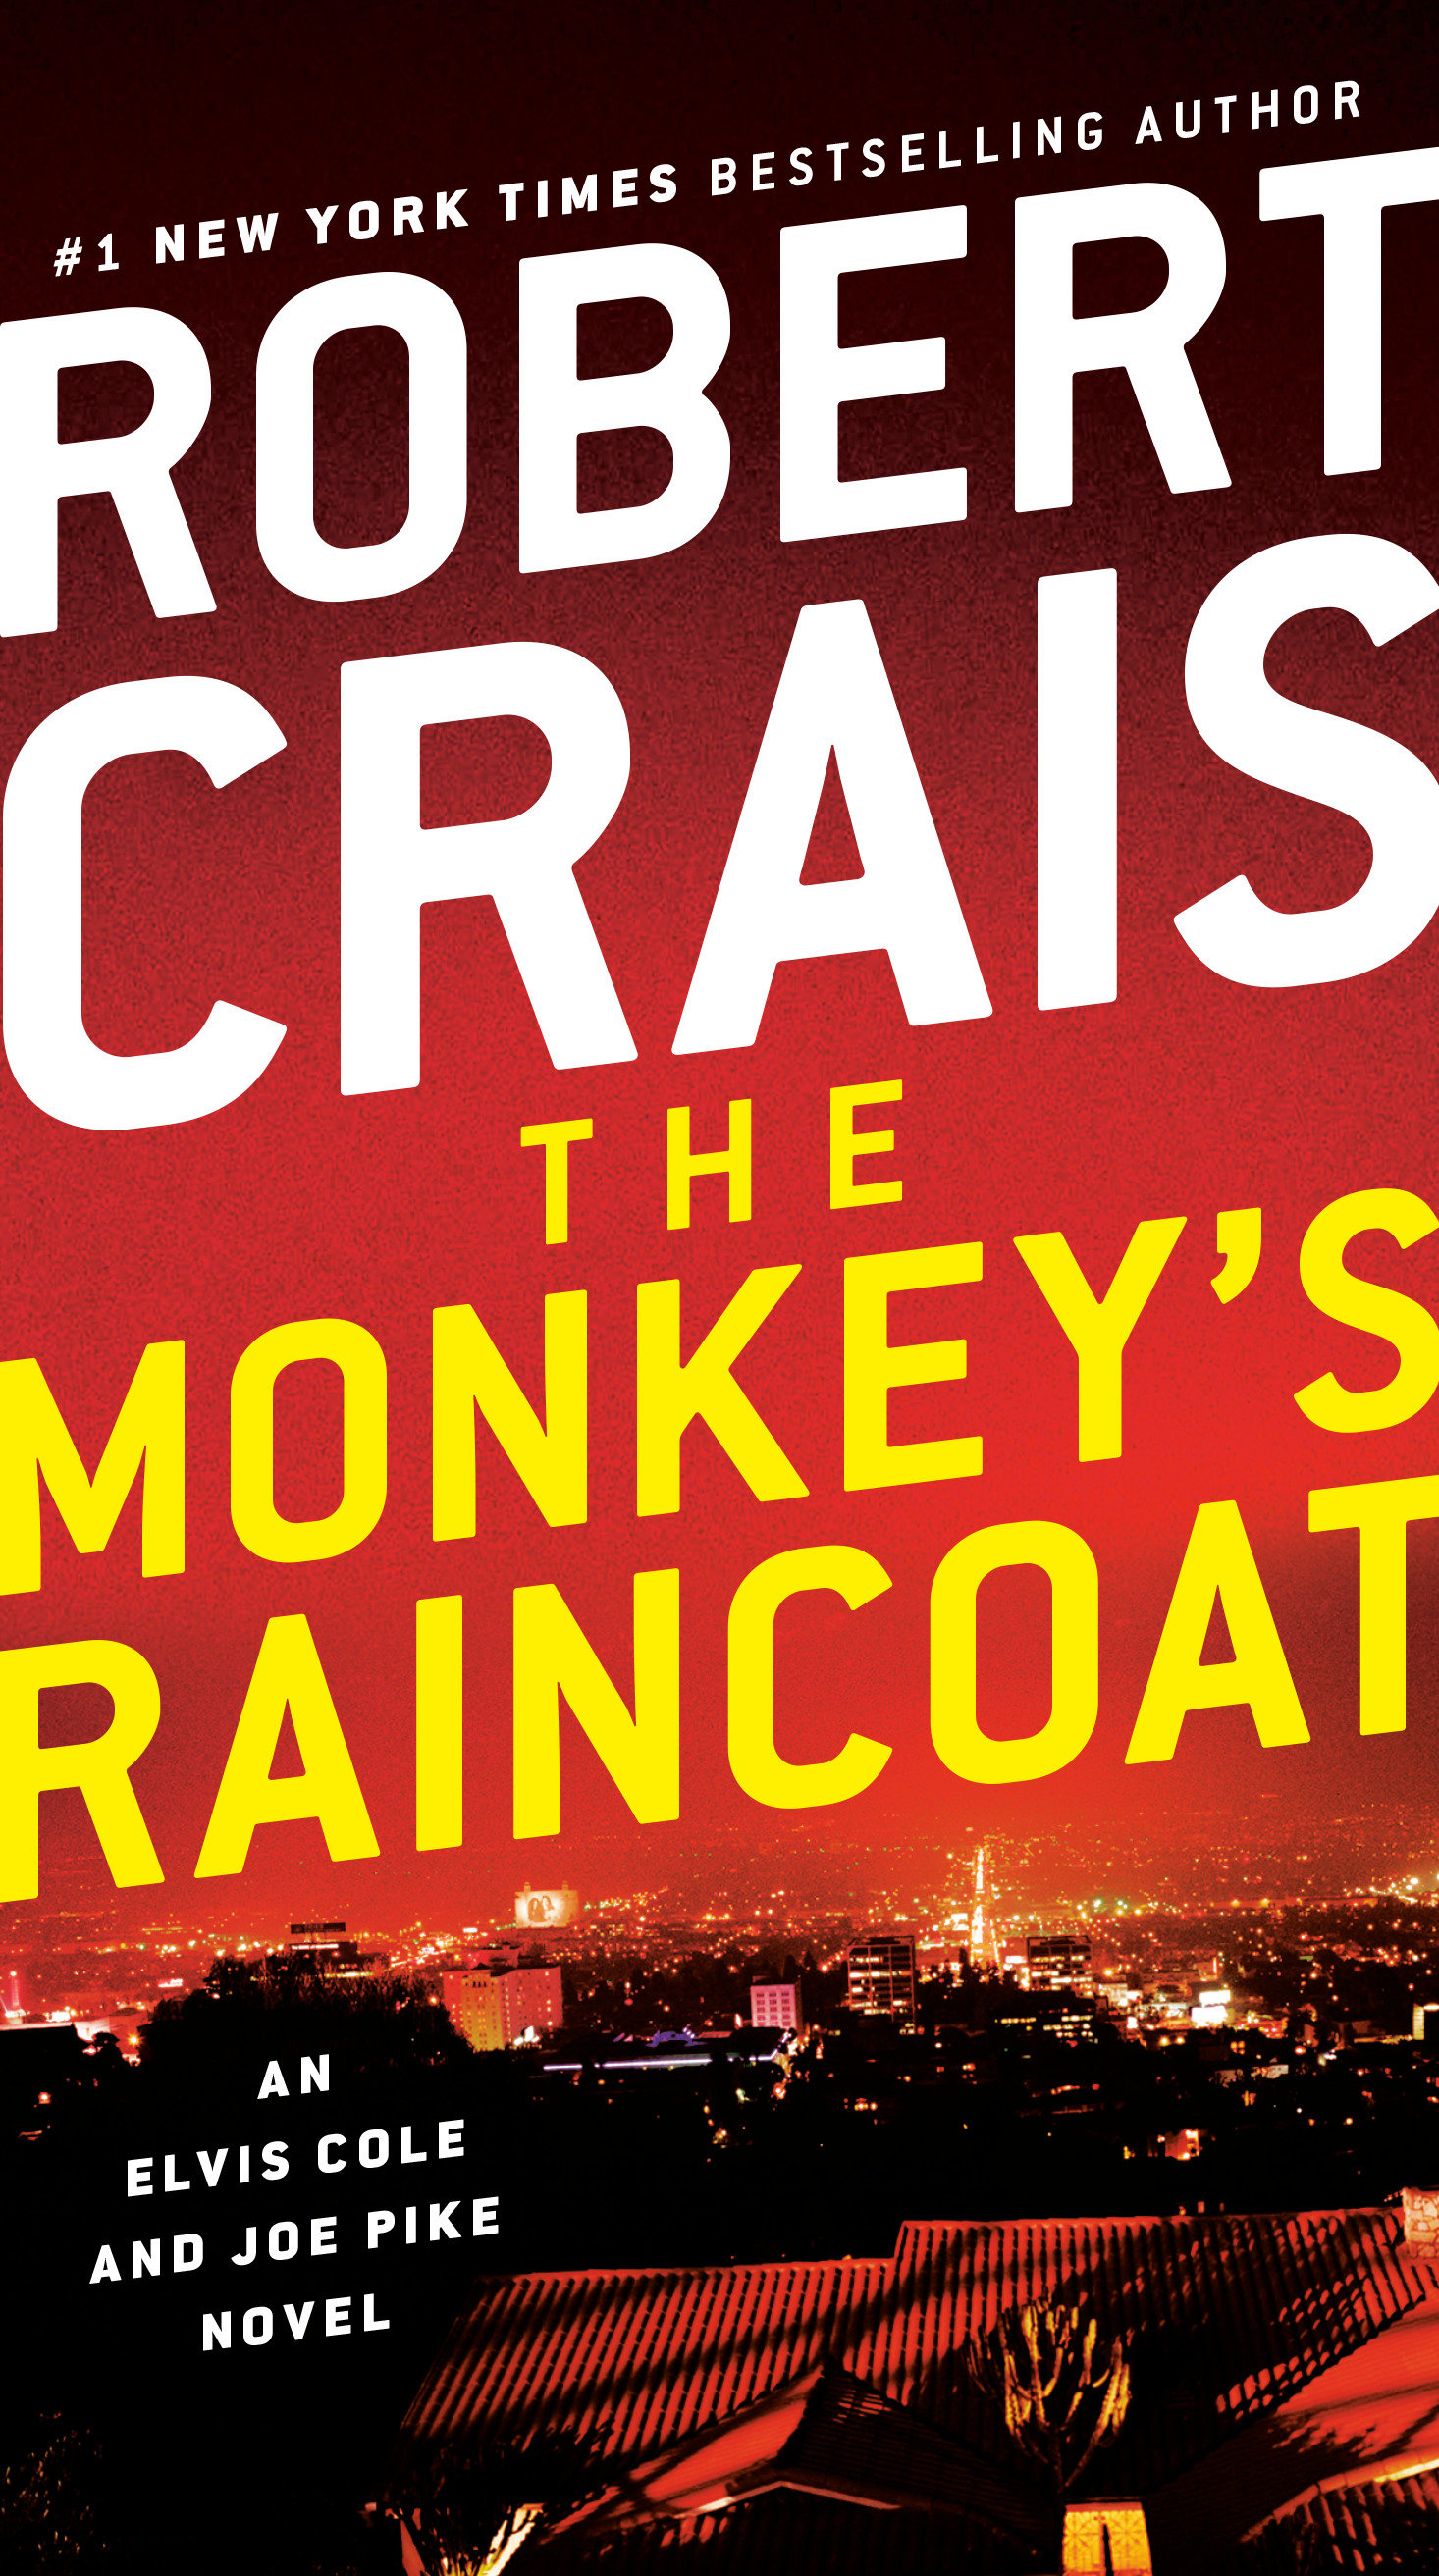 The monkey's raincoat cover image